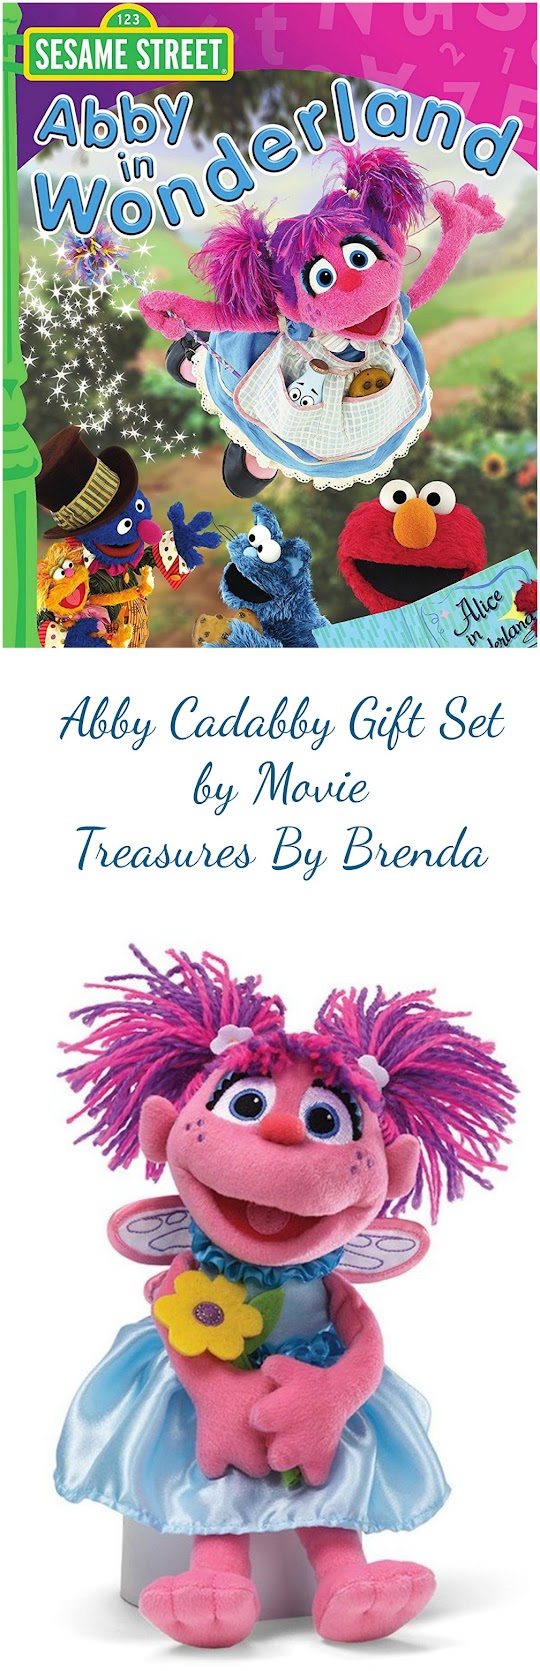 Sesame Street's Abby Cadabby Plush Toy or Doll